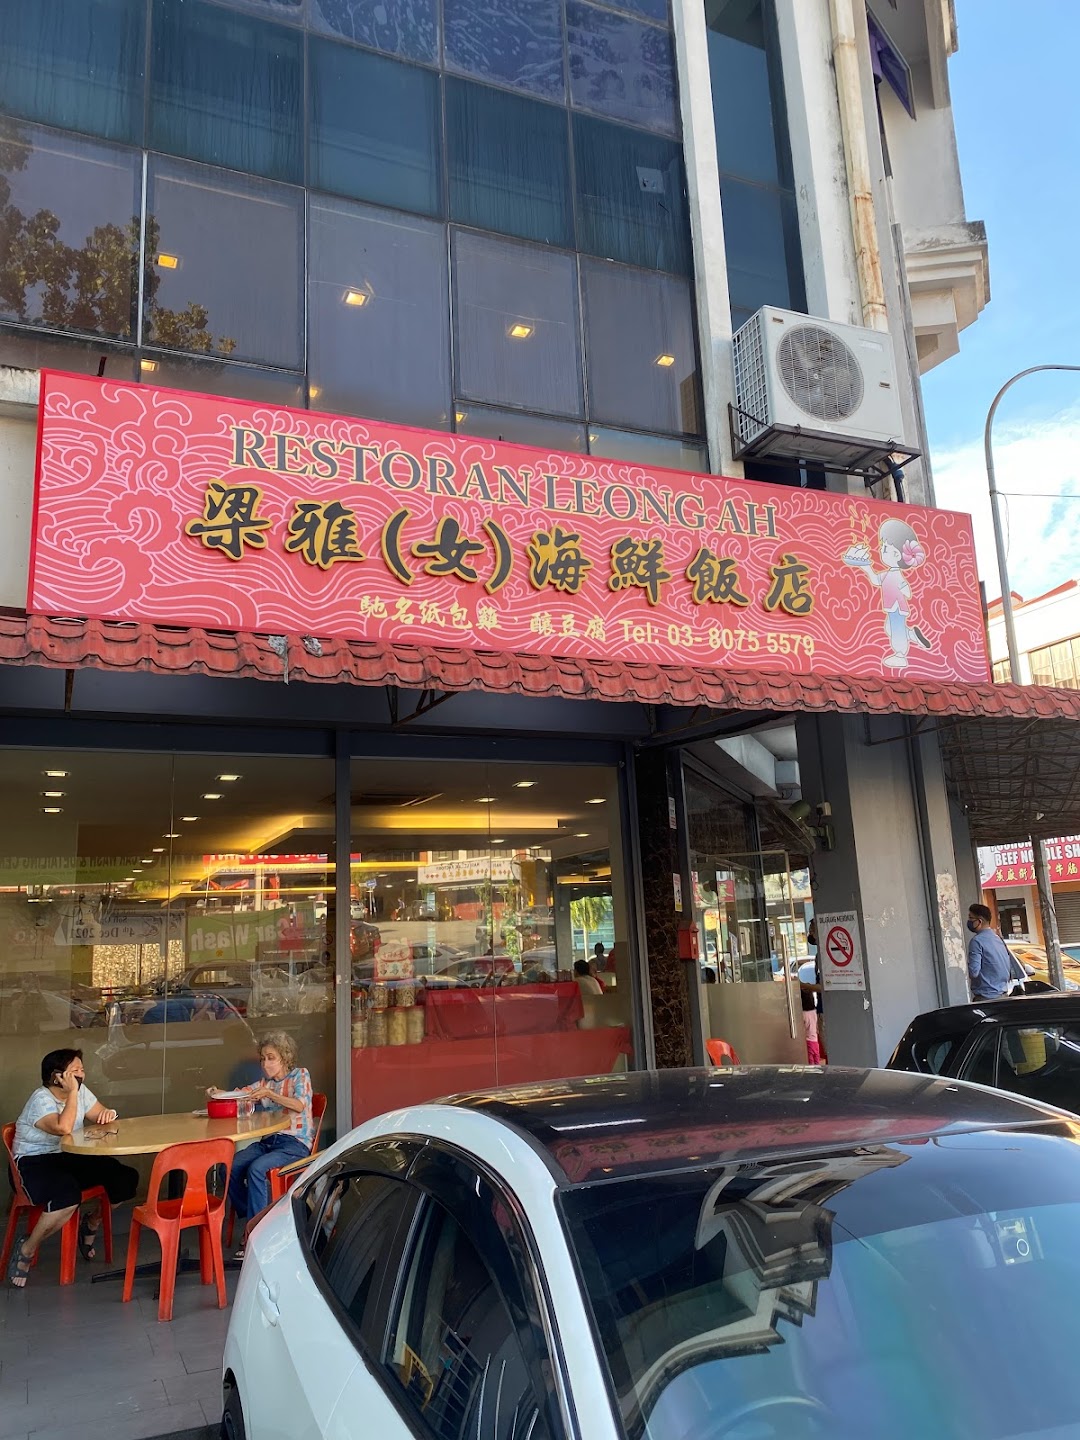 Restoran Leong Ah